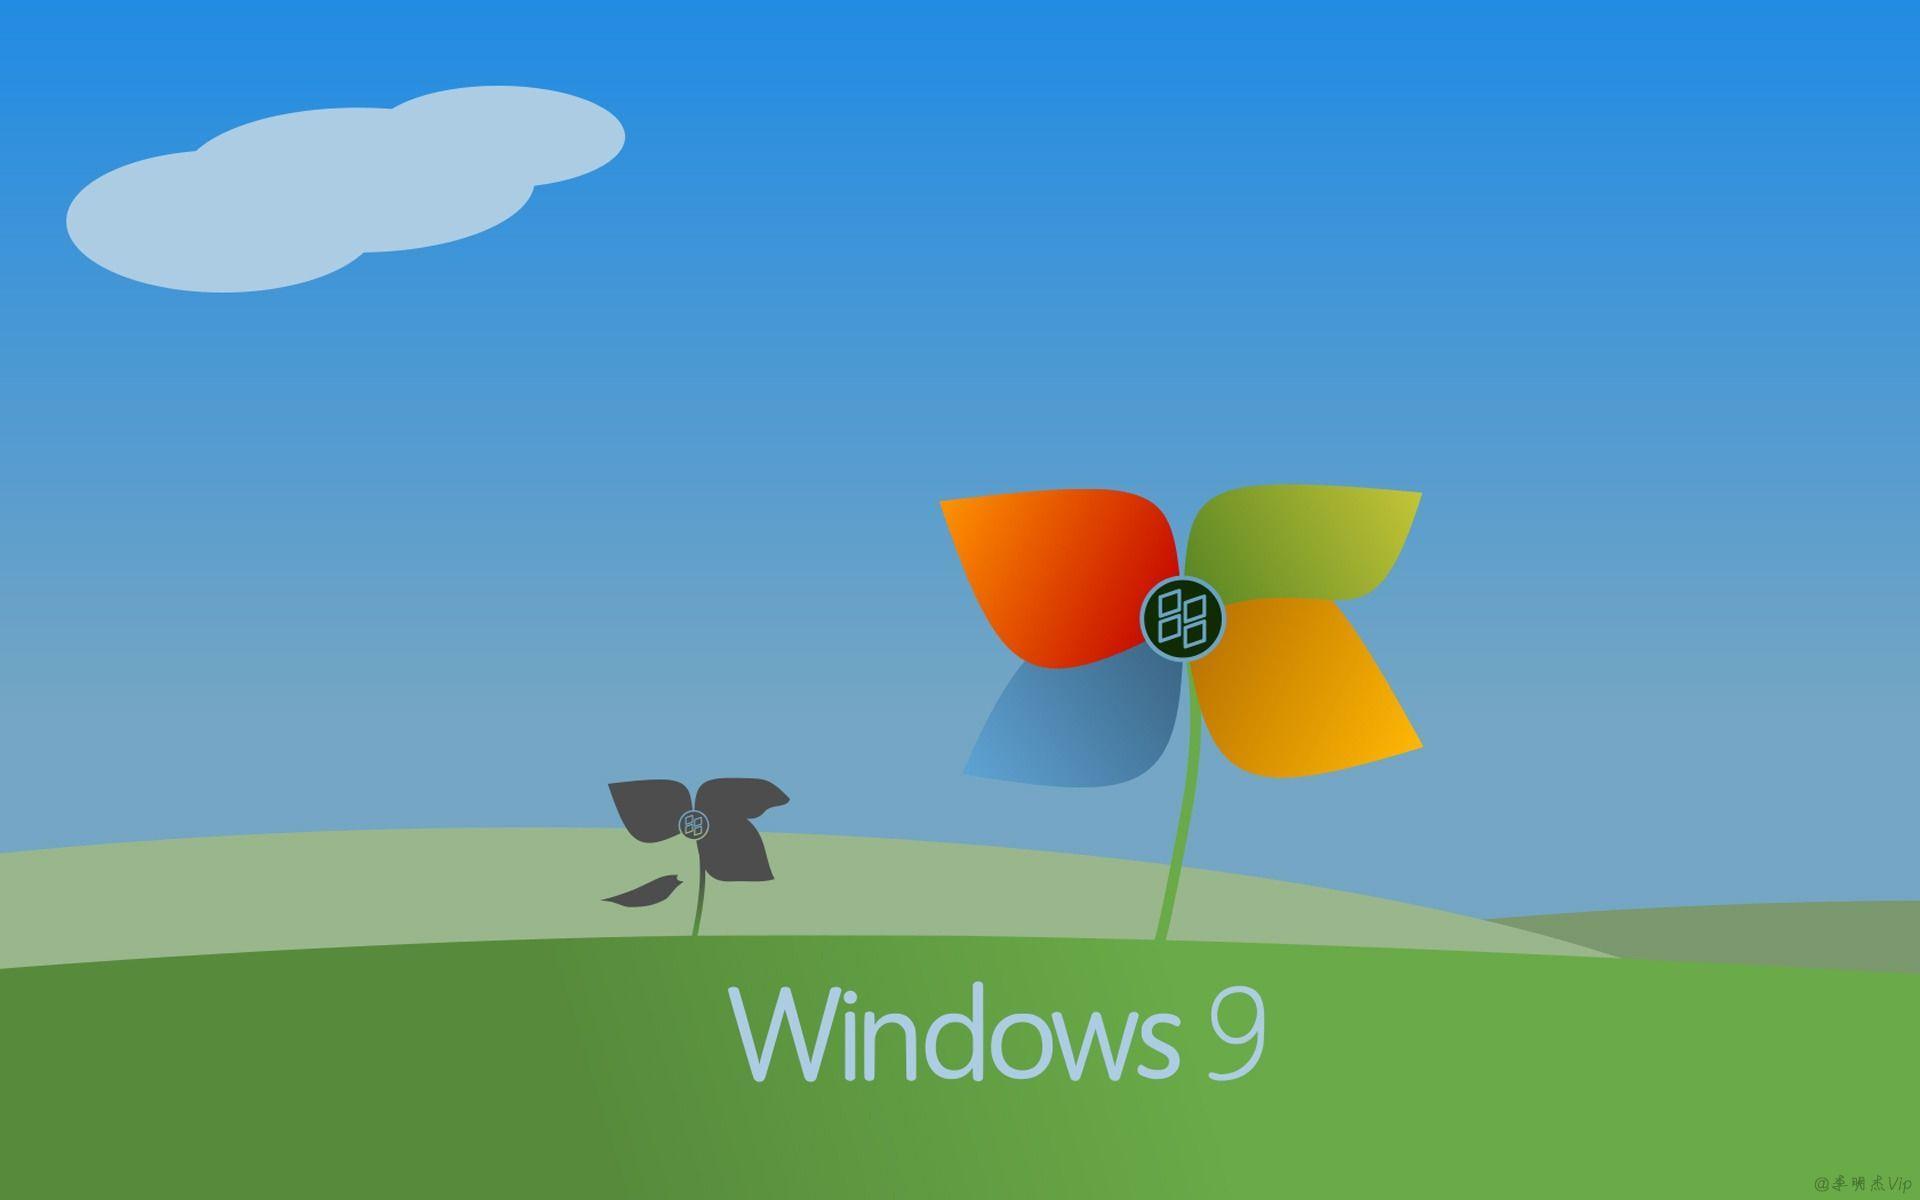 Windows 9 Wallpaper. Windows 9 Background